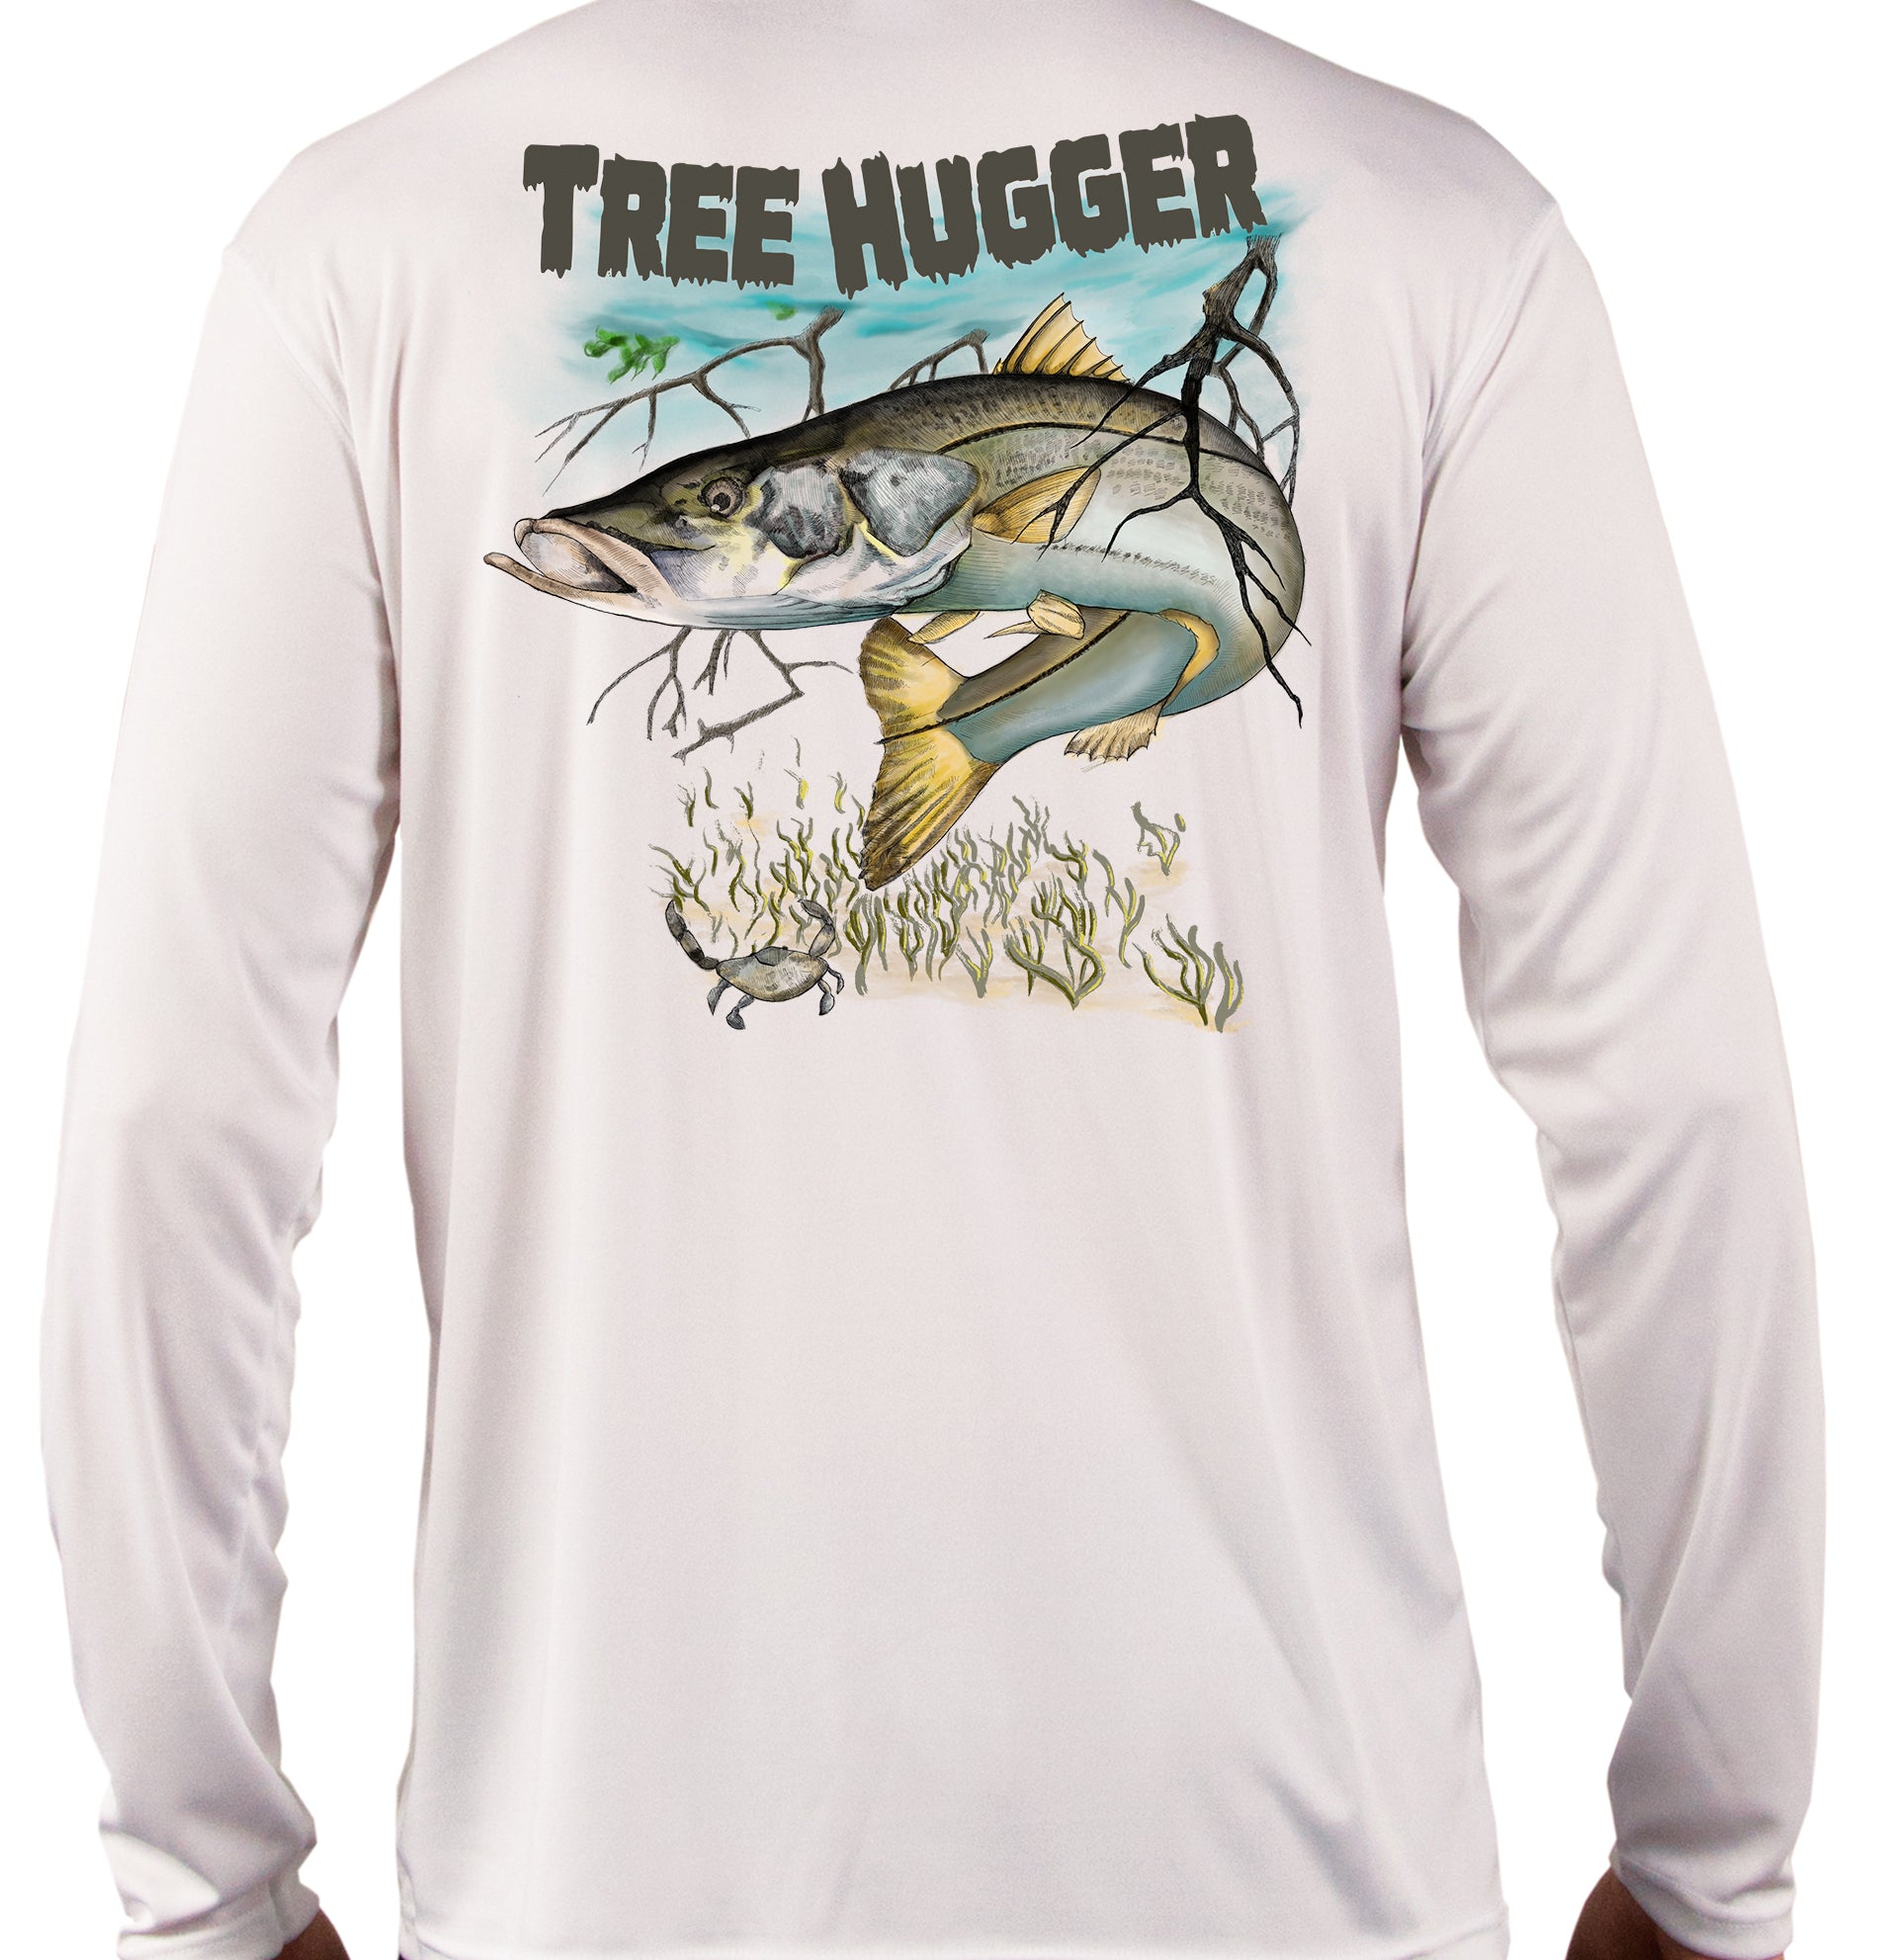 Skiff Life Snook Tree Hugger Fishing Shirts Men's Quick Dry Lightweight UPF 50+ Long Sleeve Shirts Rash Guard Swim Shirts Hiking Shirts Moisture Wicking - Skiff Life